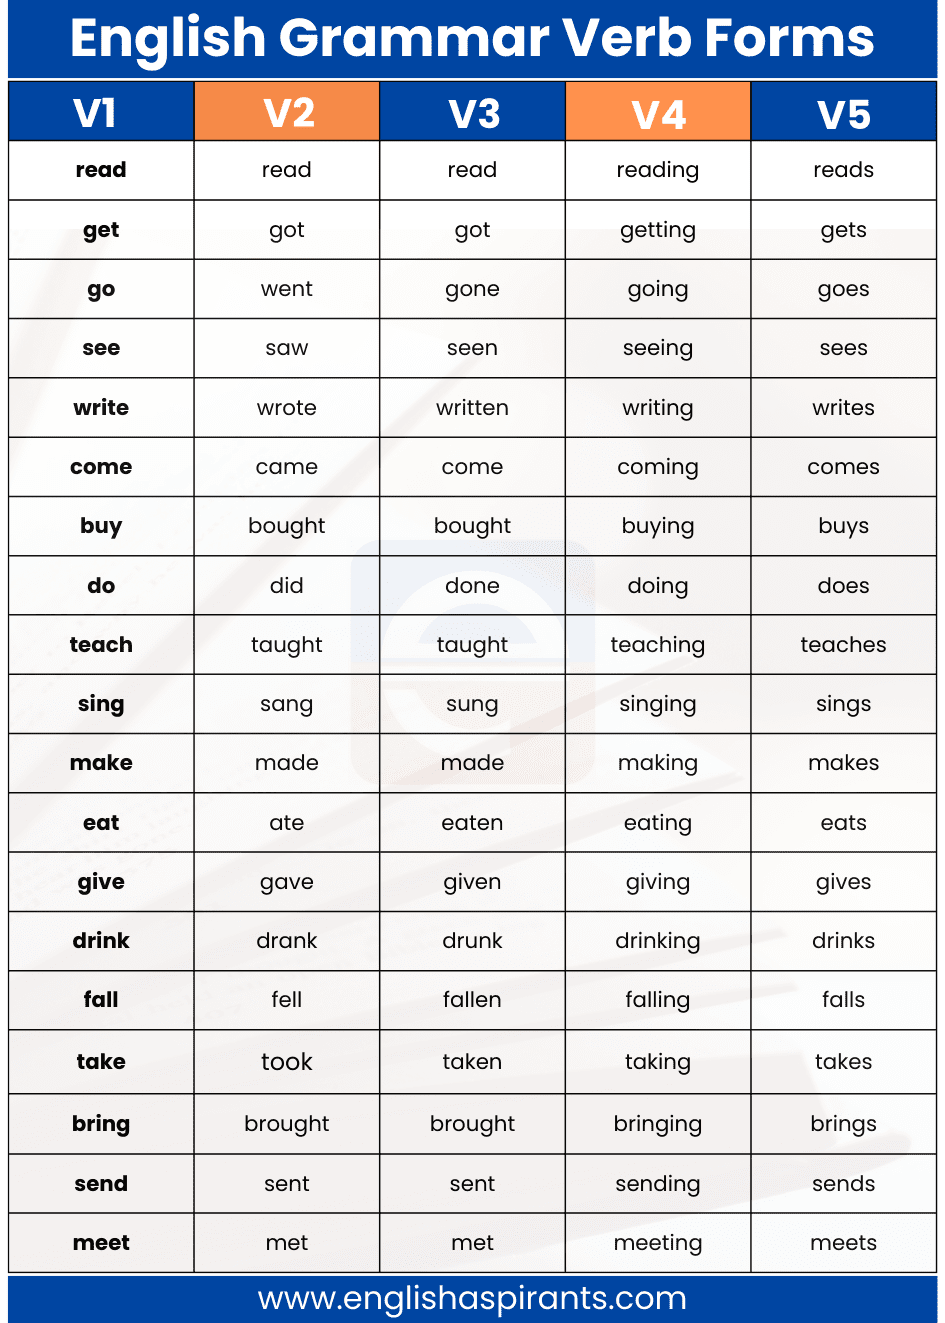 English Grammar Verb Forms V1 V2 V3 V4 V5 100 Words